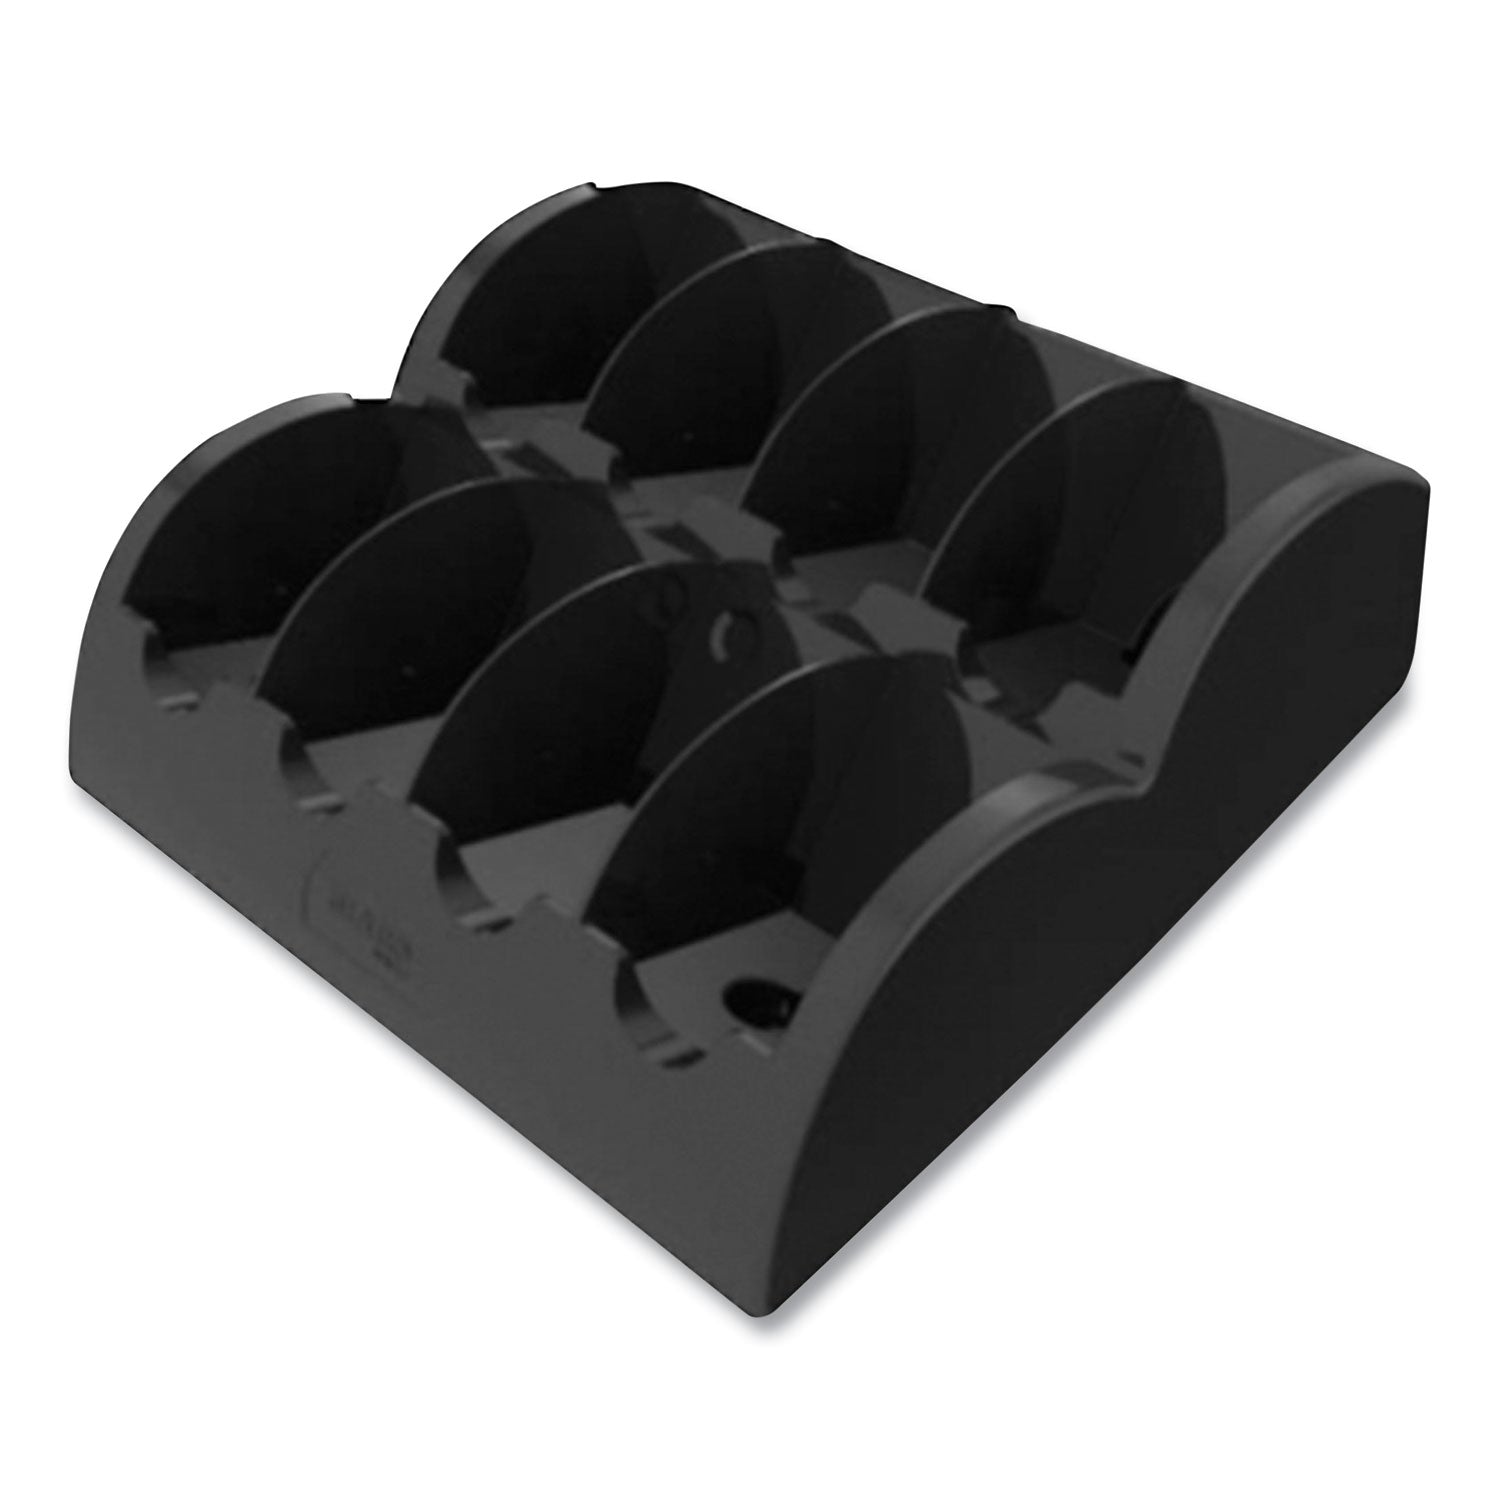 plastic-coffee-organizer-for-flavia-freshpacks-8-compartments-136-x-13-x-44-black_mdkmdr00084 - 1